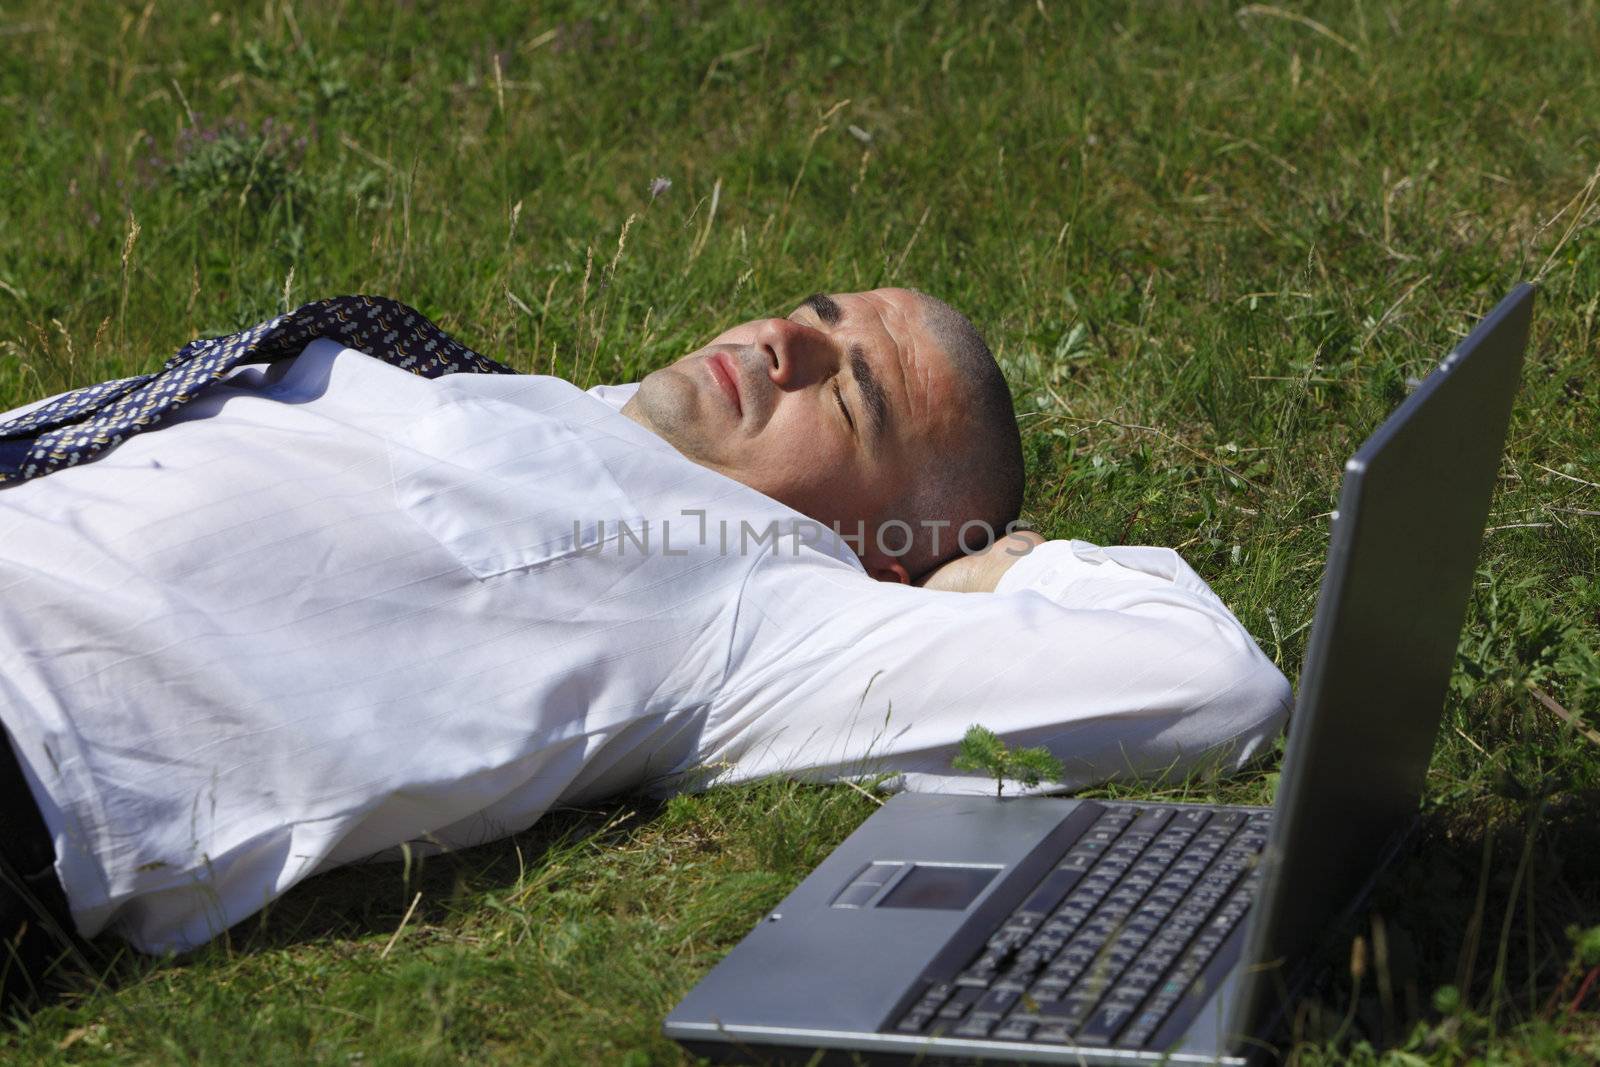 Tired man sleeping in a field near his laptop.